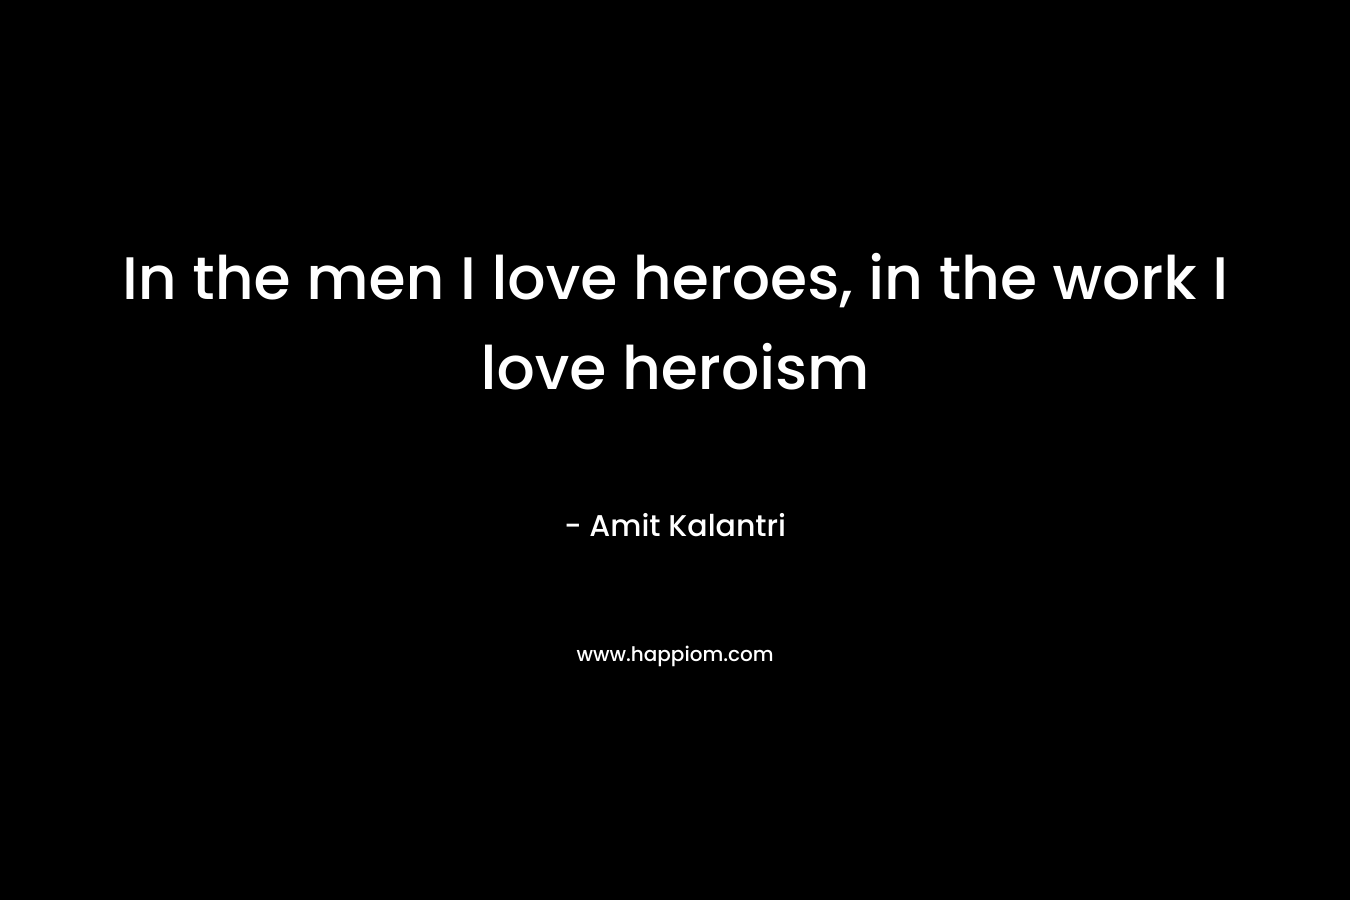 In the men I love heroes, in the work I love heroism